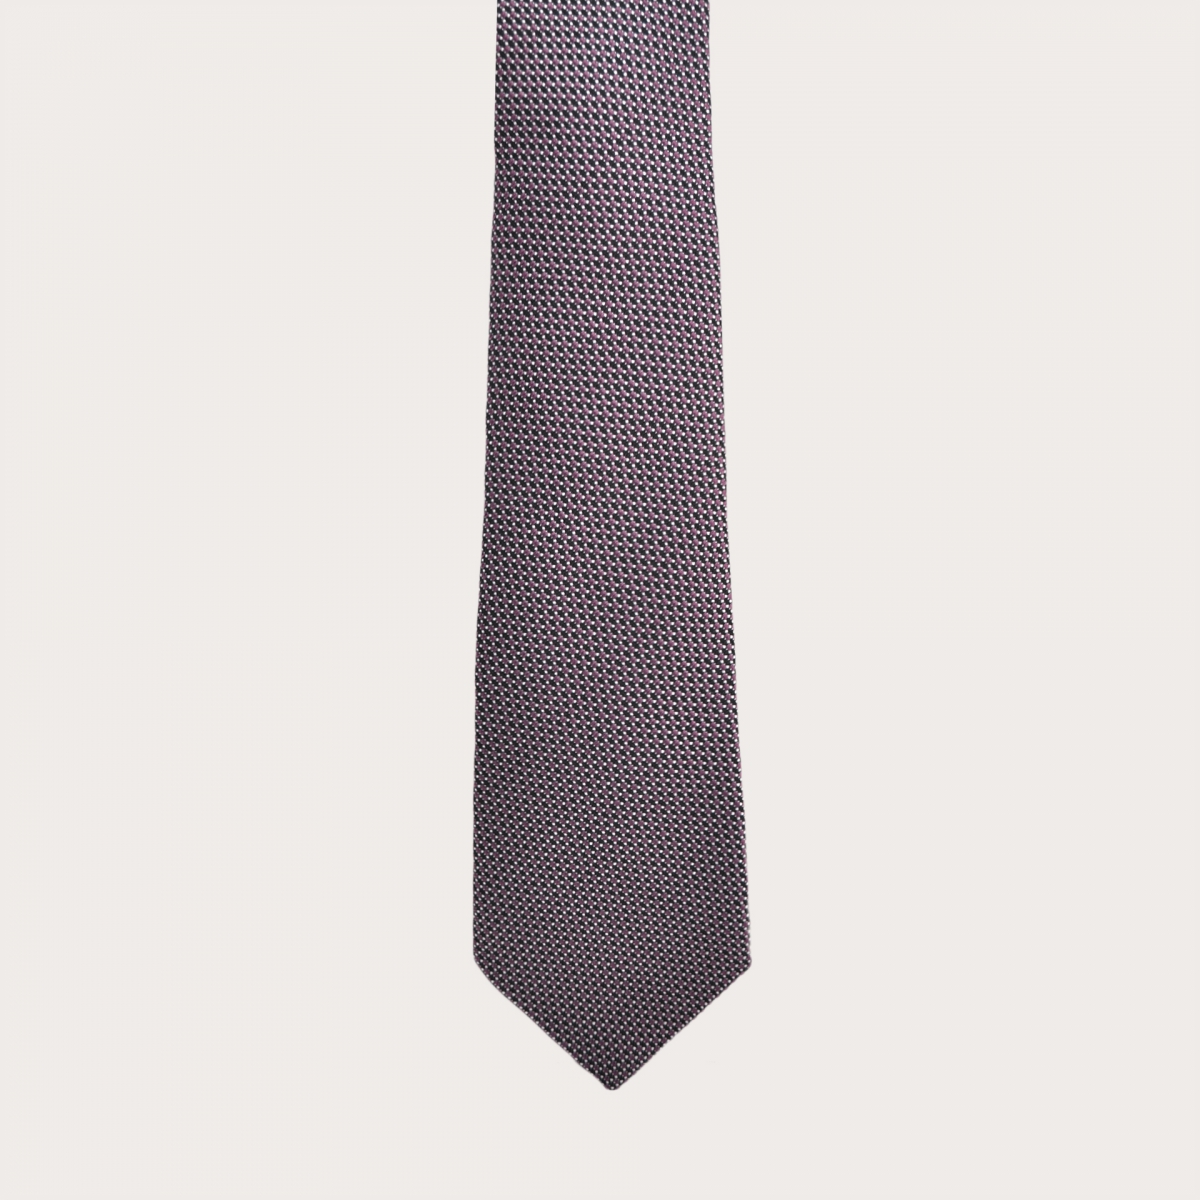 Cravatta in seta jacquard, puntaspillo rosa